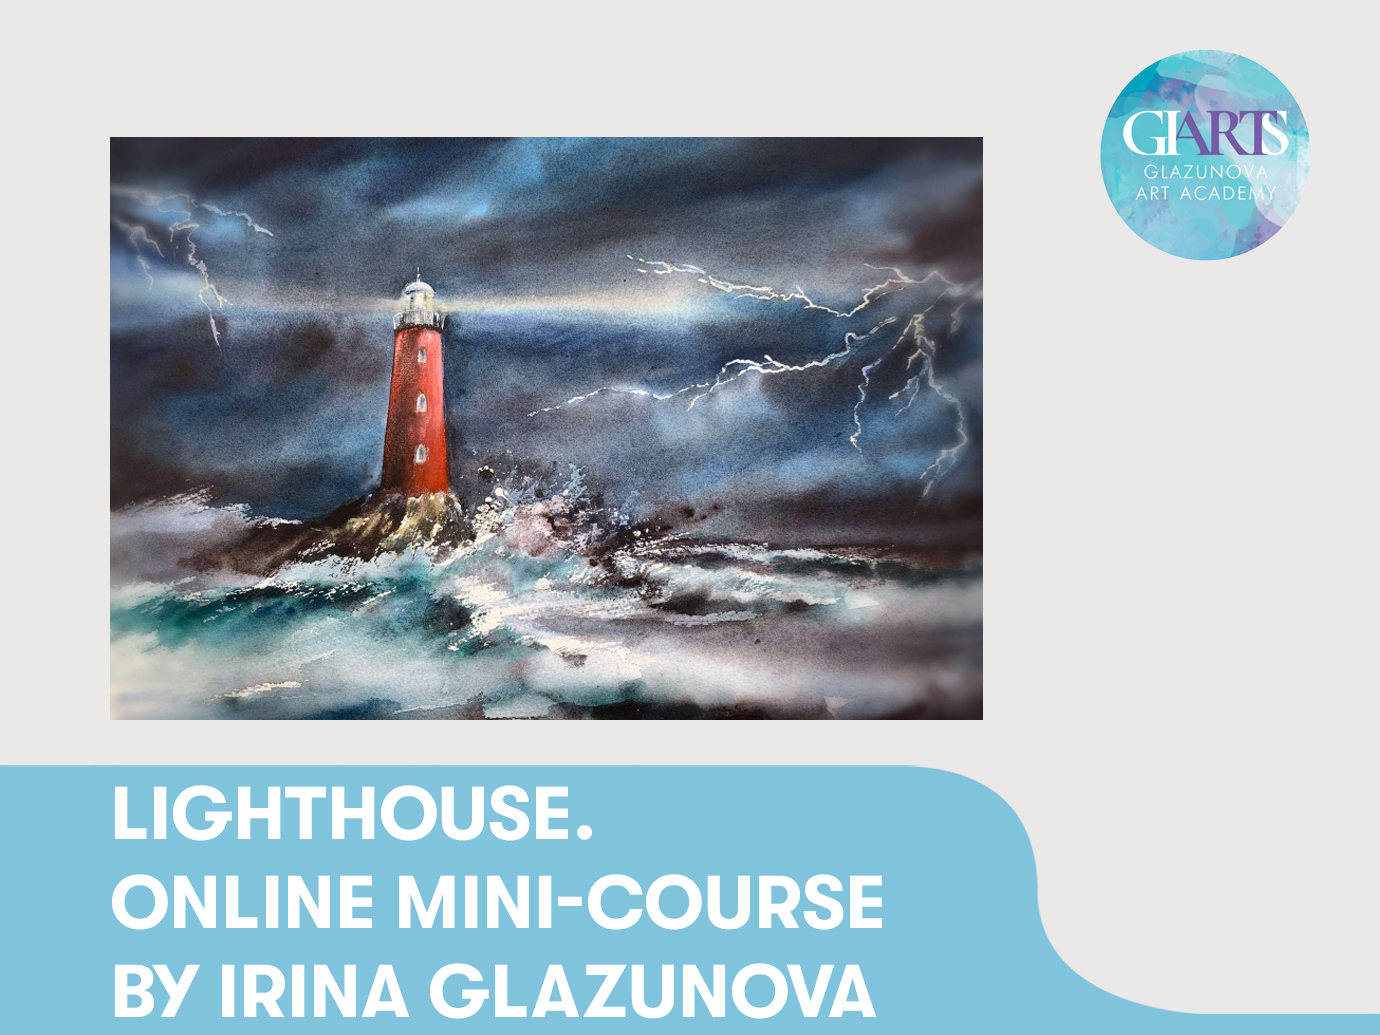 Lighthouse. Online mini-course by Irina Glazunova